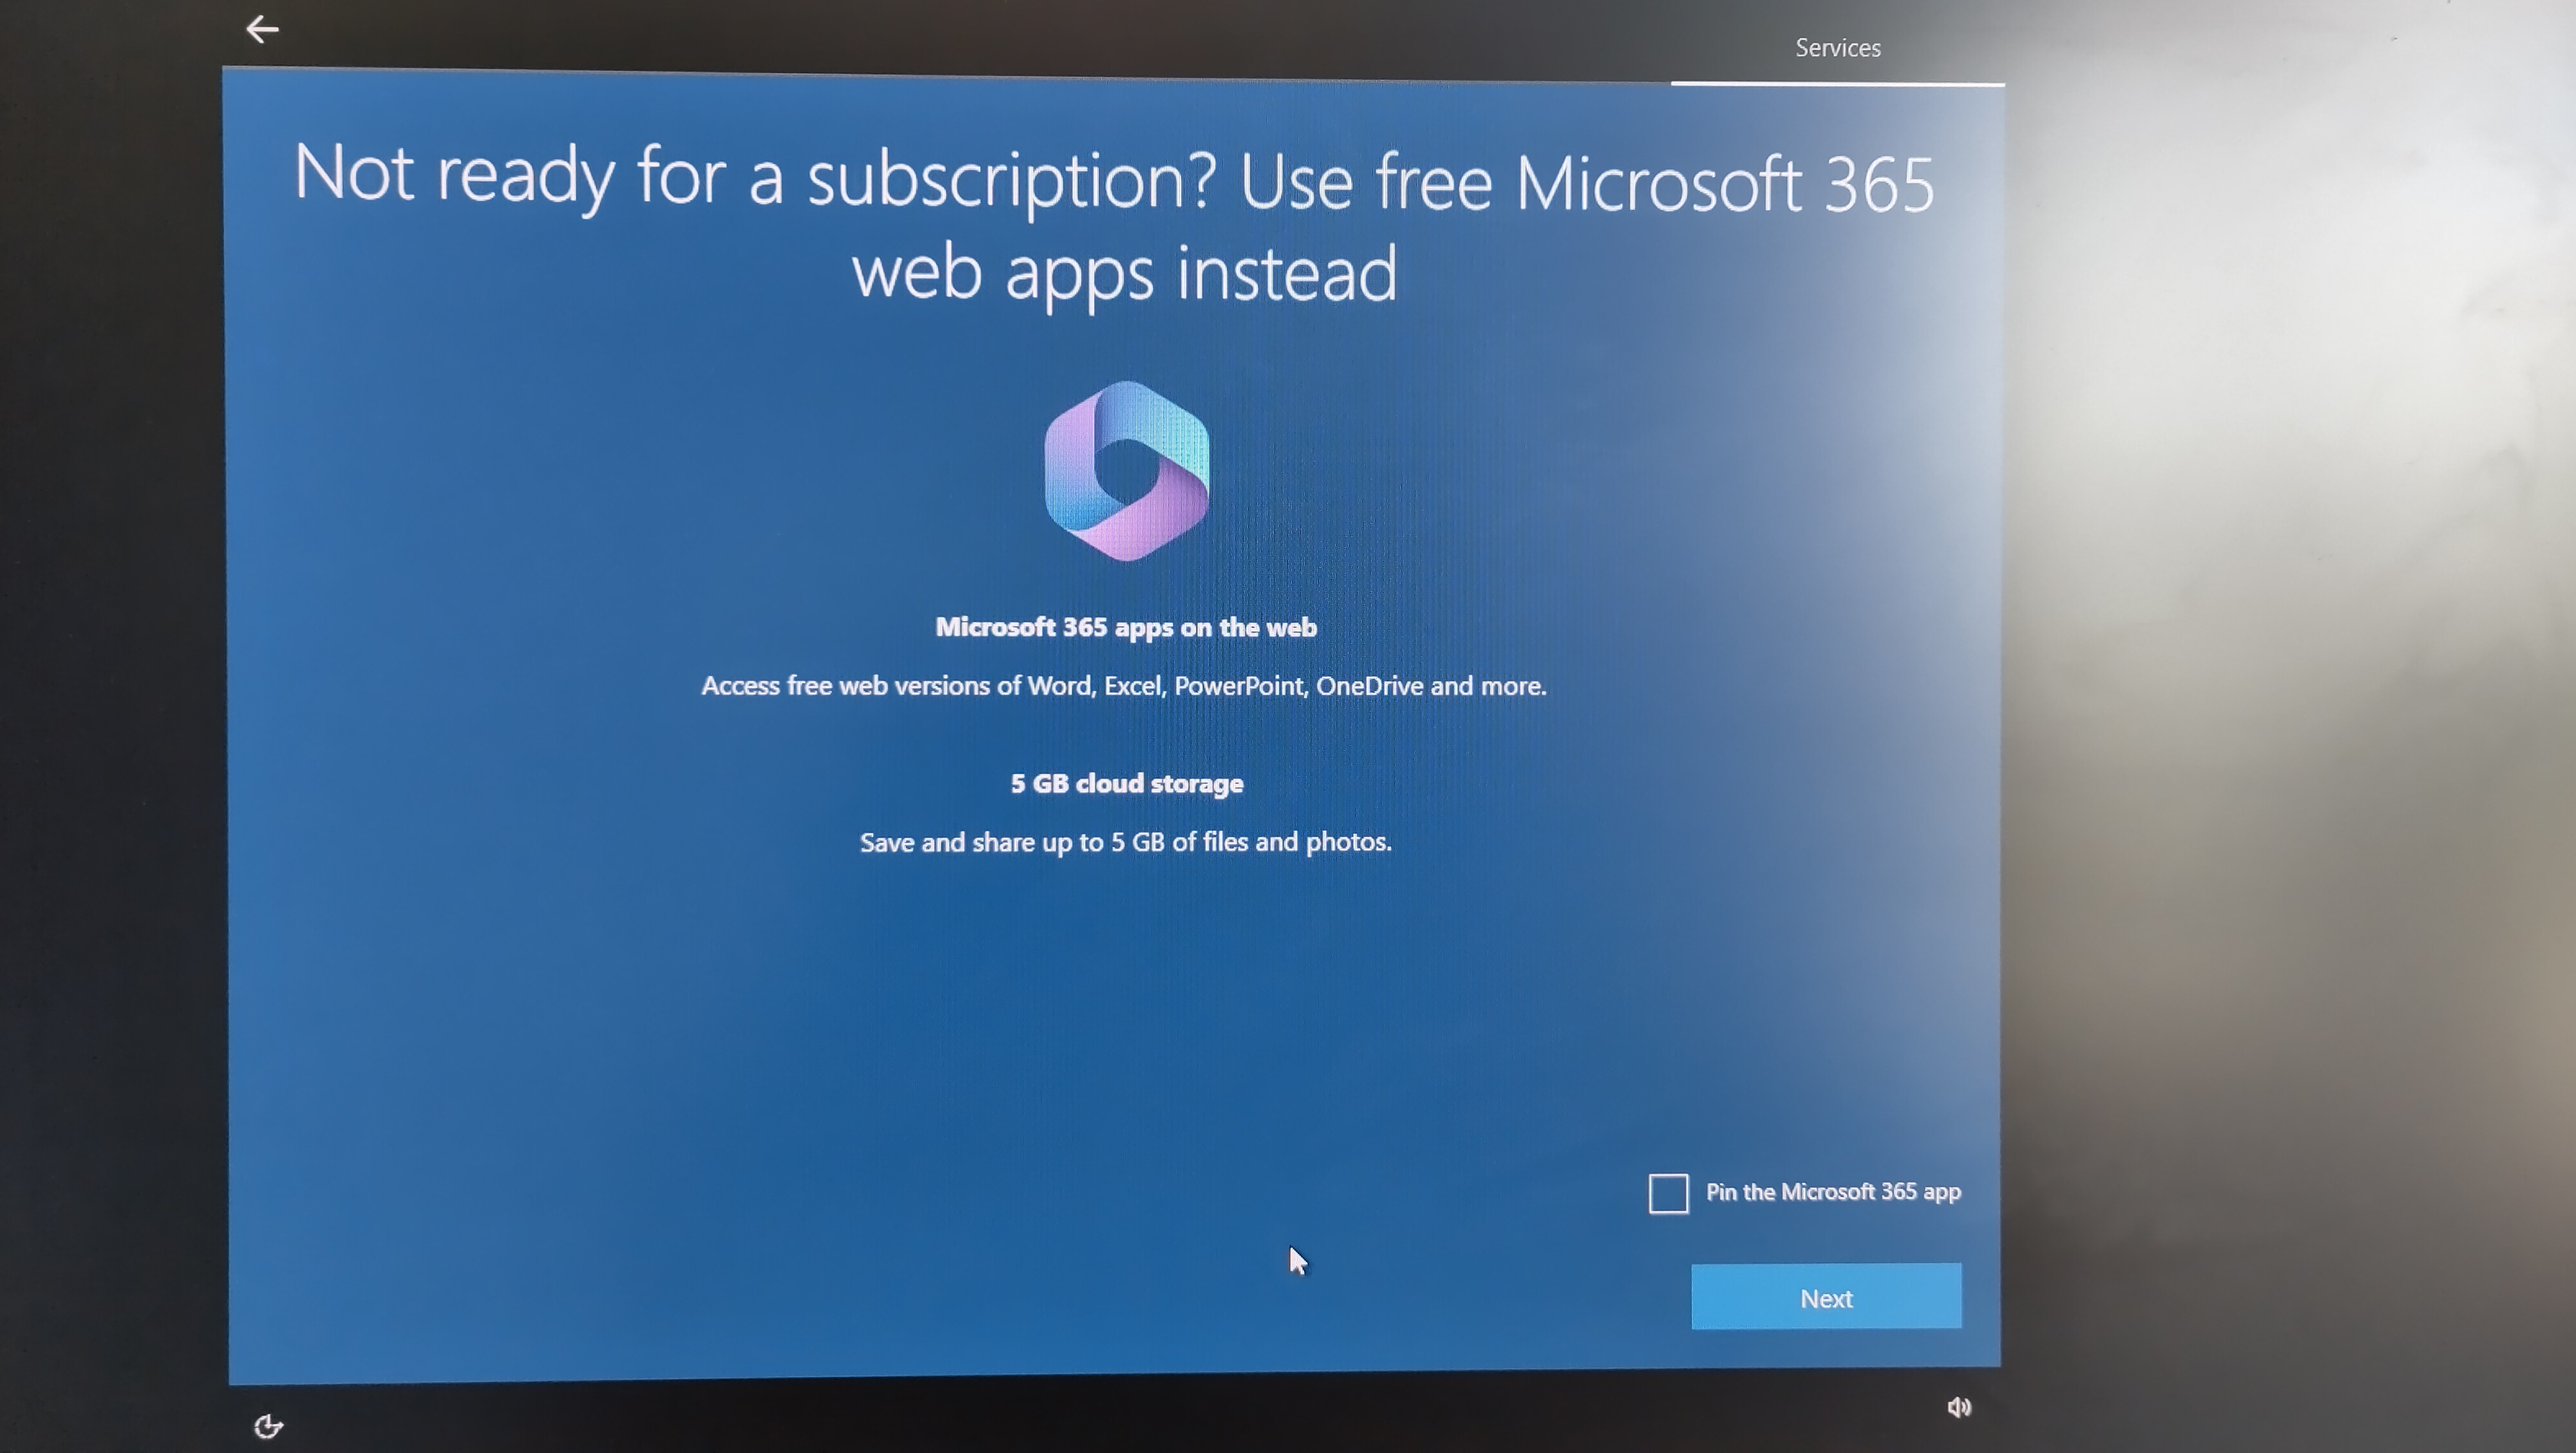 Use free Microsoft 365 web apps instead